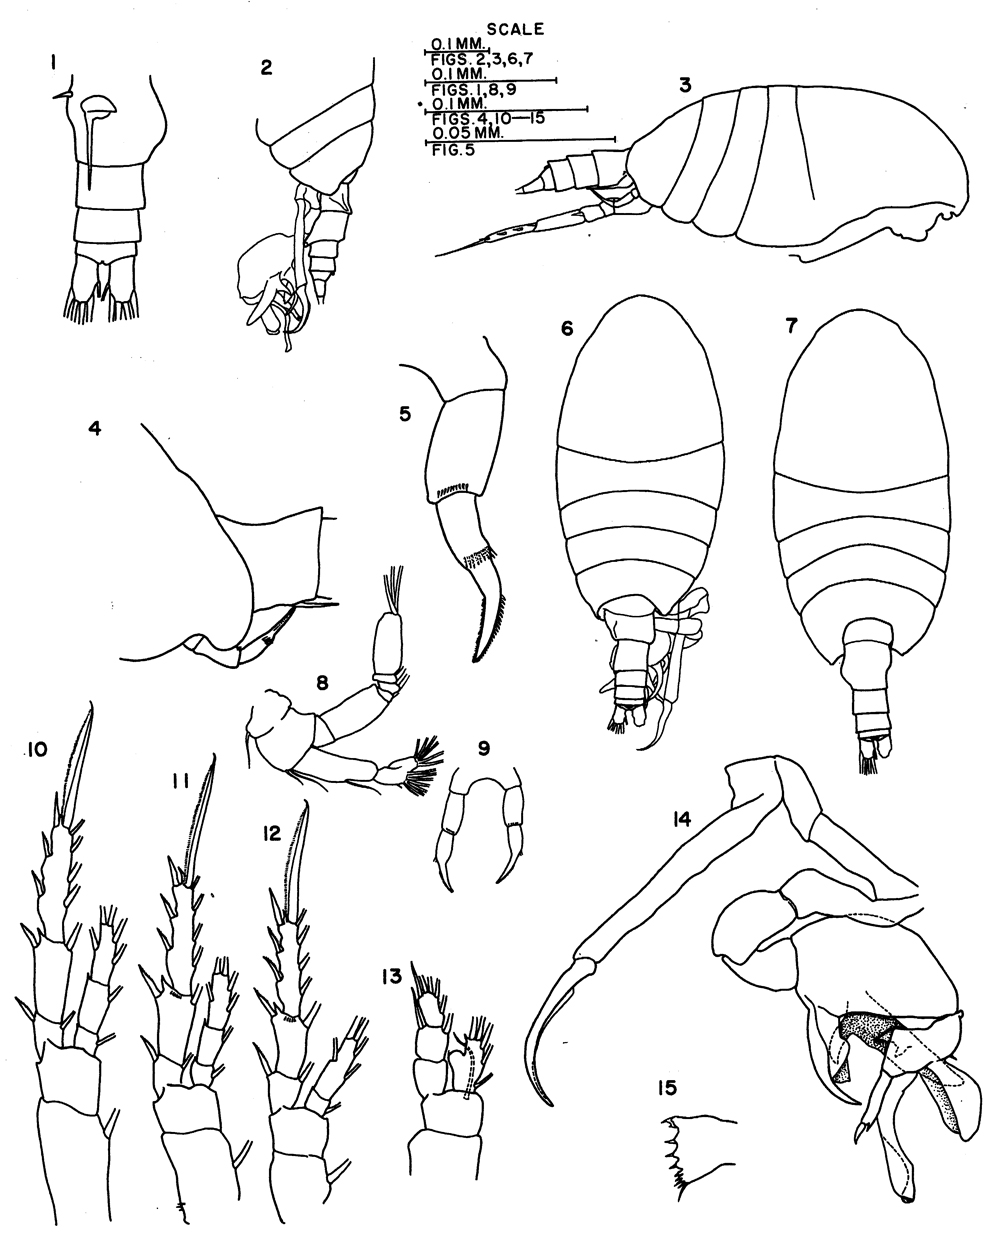 Species Stephos deichmannae - Plate 1 of morphological figures